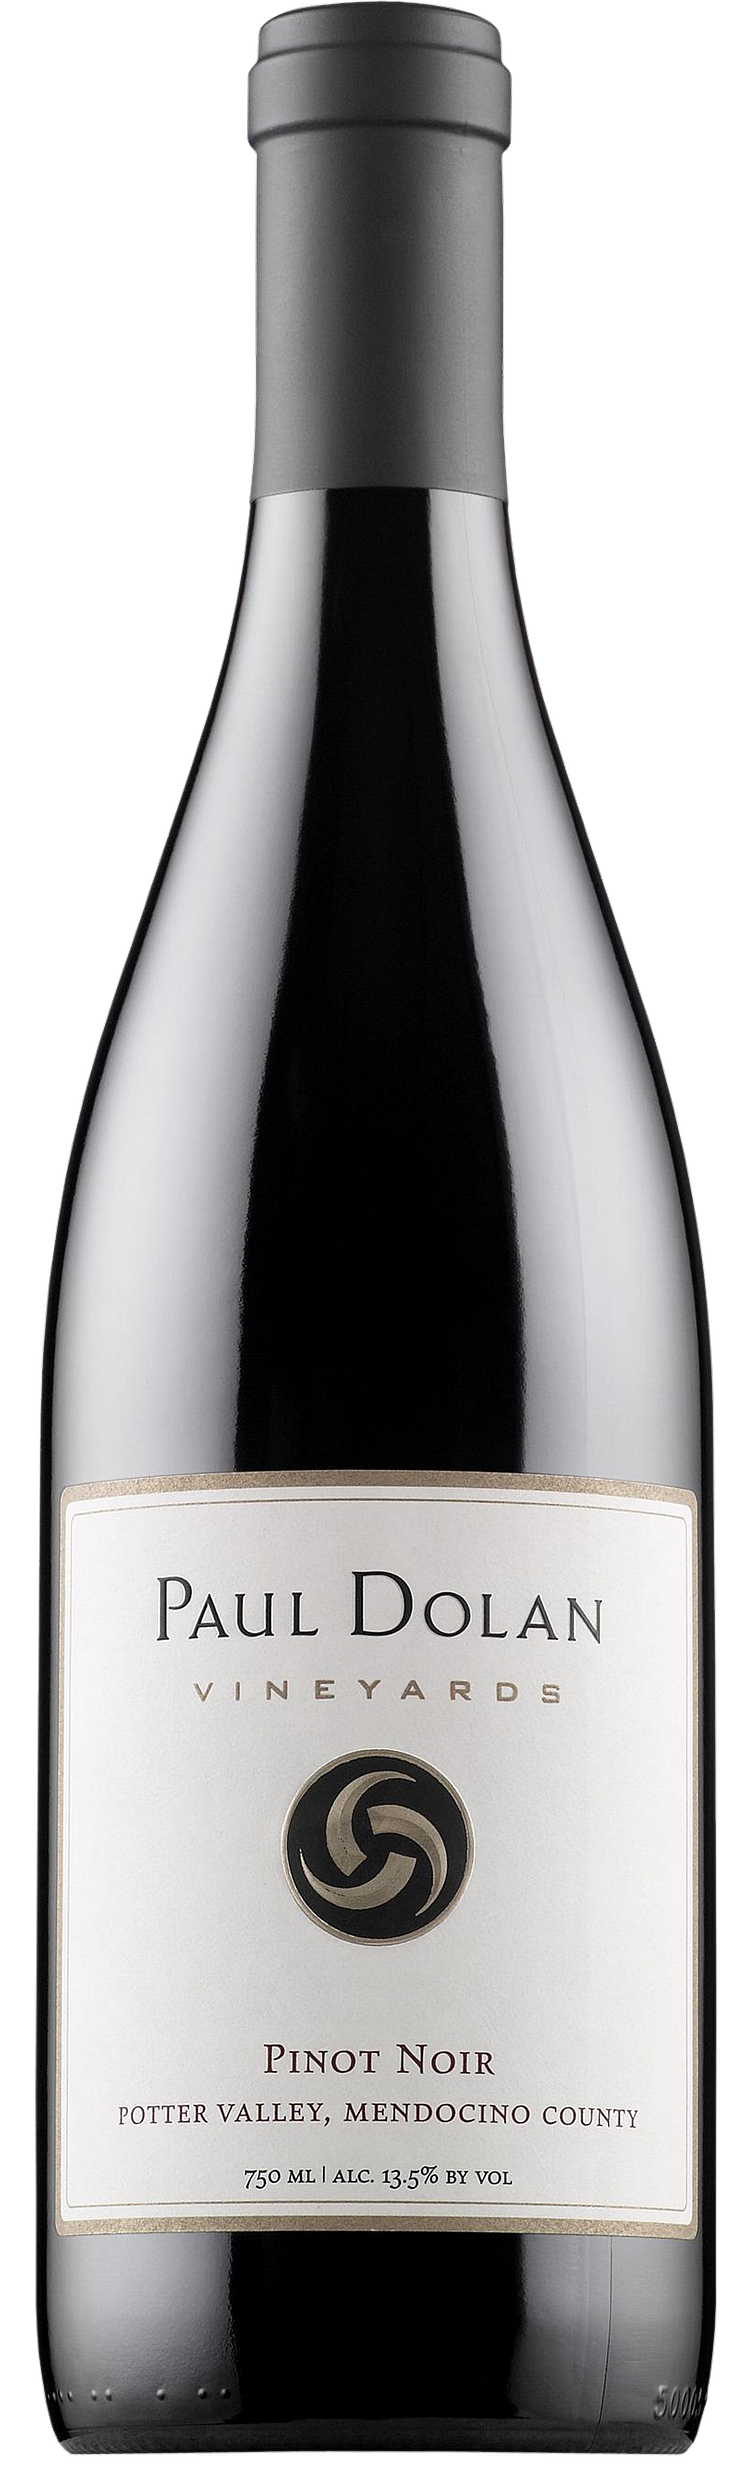 Paul Dolan Pinot Noir